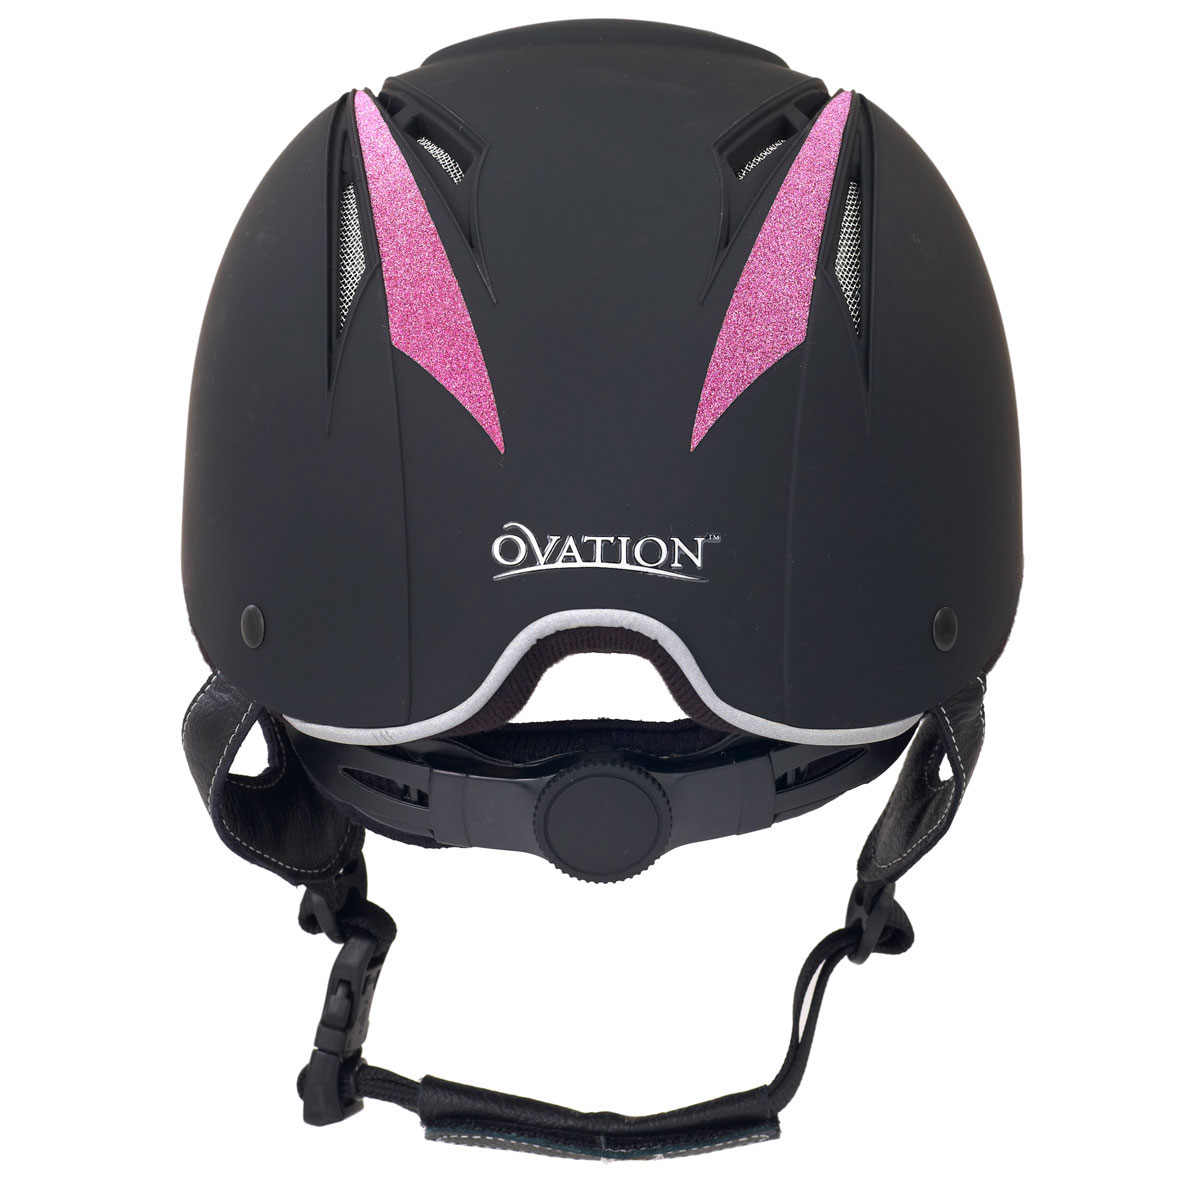 Ovation Replacement Riding Helmet Visor for Ovation Helmets 467566-67-68 